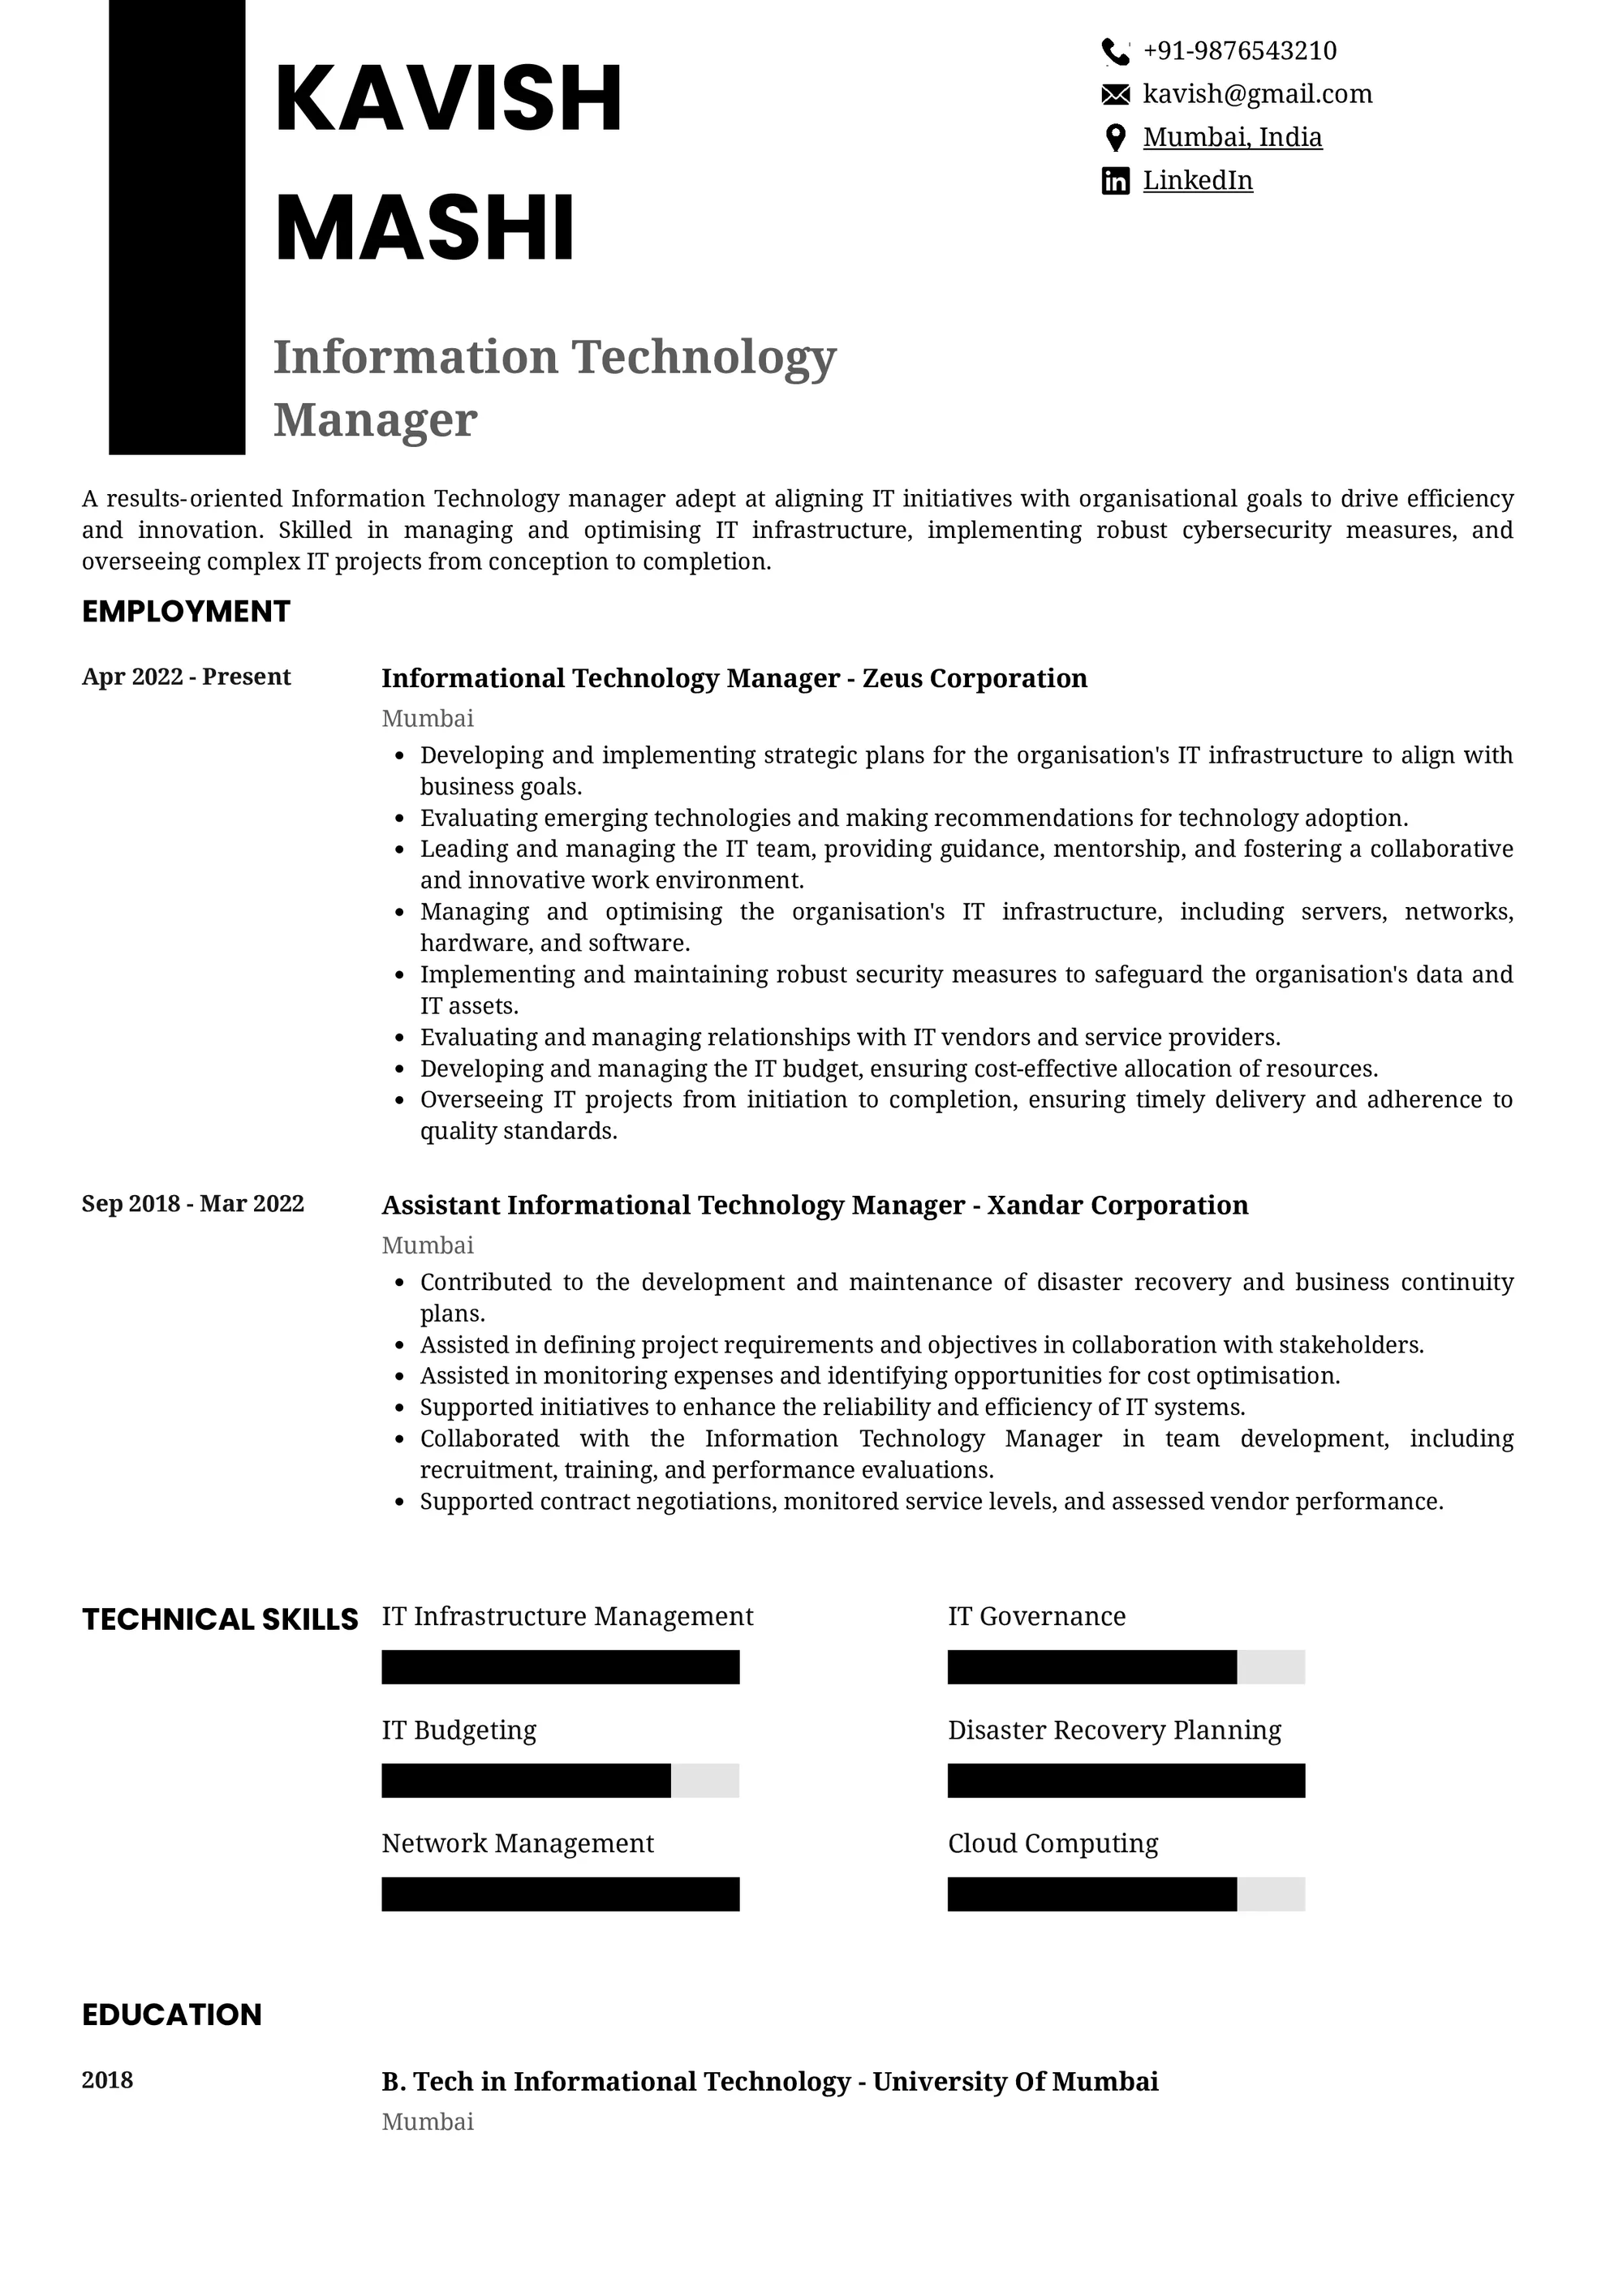 creative resume profile